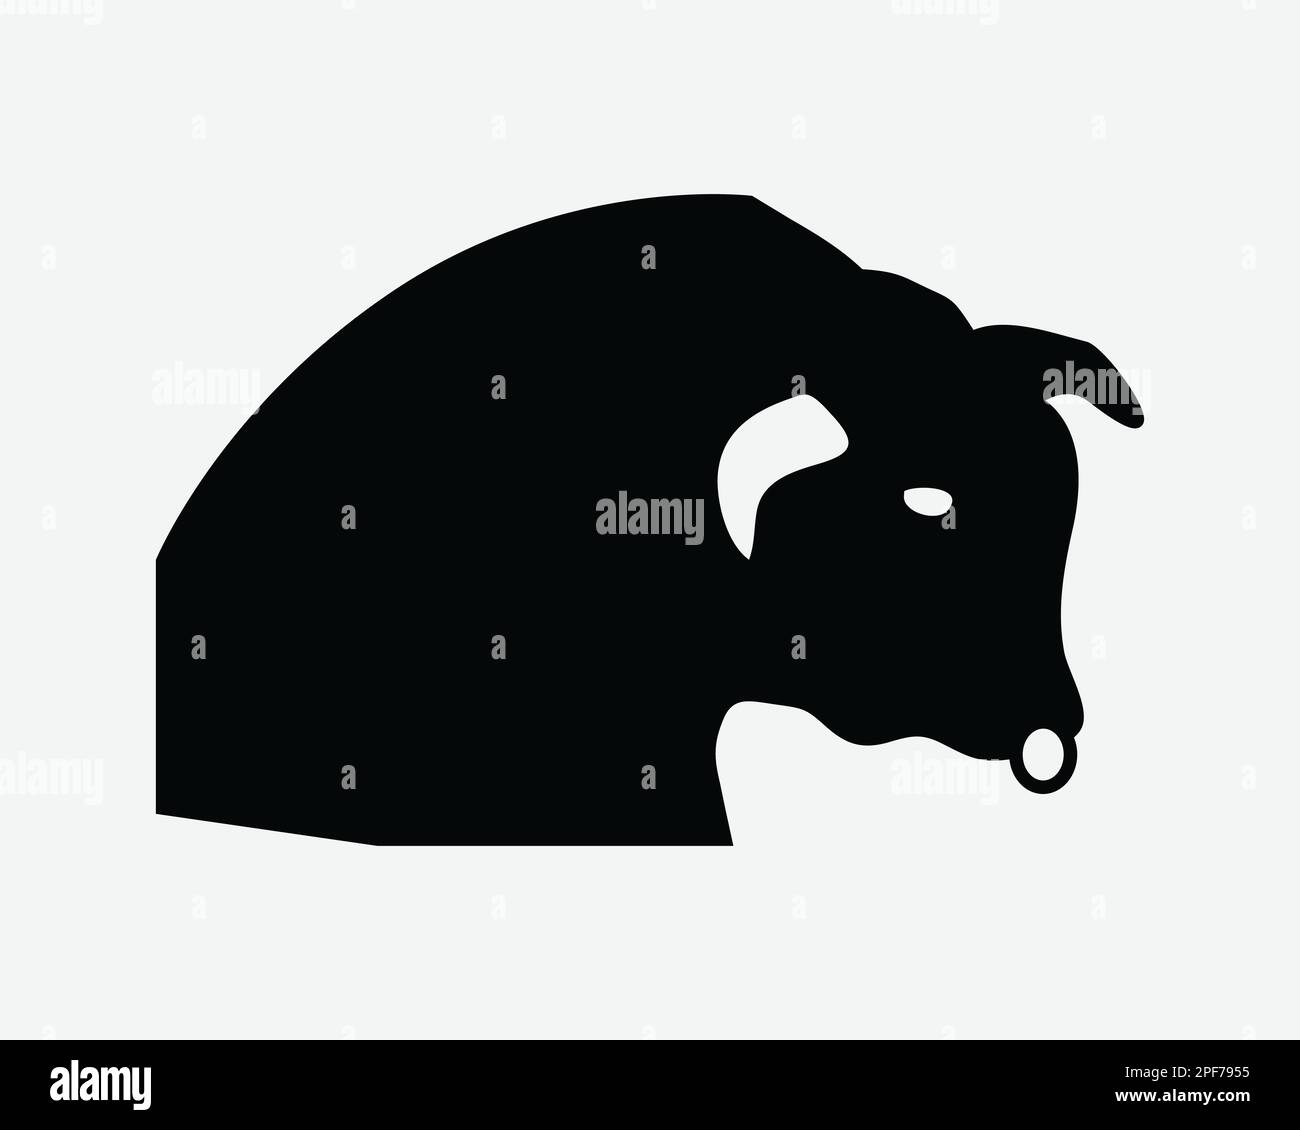 Bull Icon Ox Cow Head Buffalo Horn Animal Ring Toreador Taurus Black White Silhouette Symbol Sign Graphic Clipart Artwork Illustration Pictogram Vecto Stock Vector